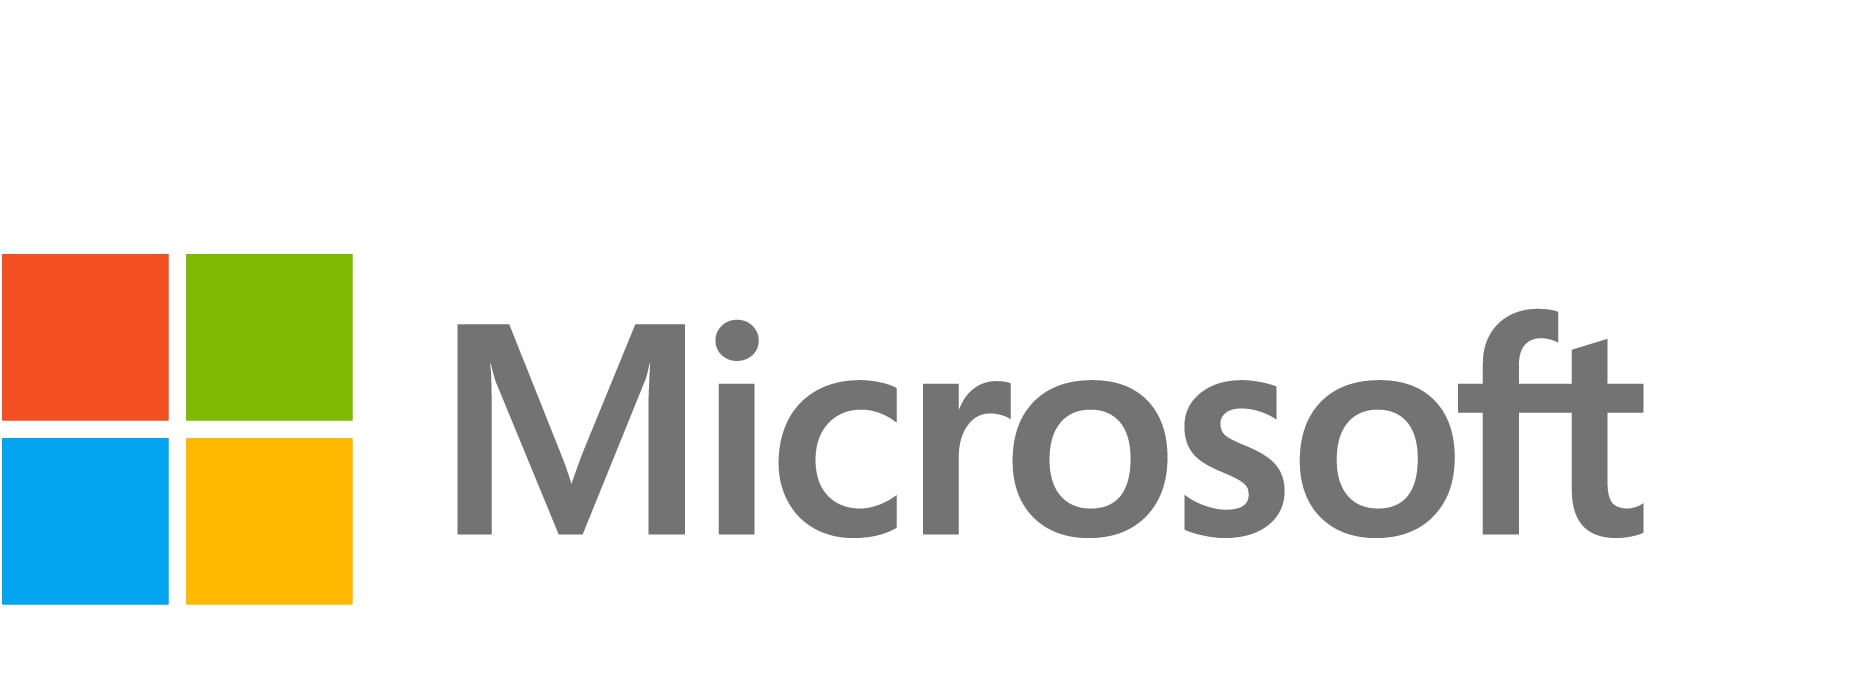 Microsoft Windows Remote Desktop Services - External Connector License & Software Assurance - 1 server